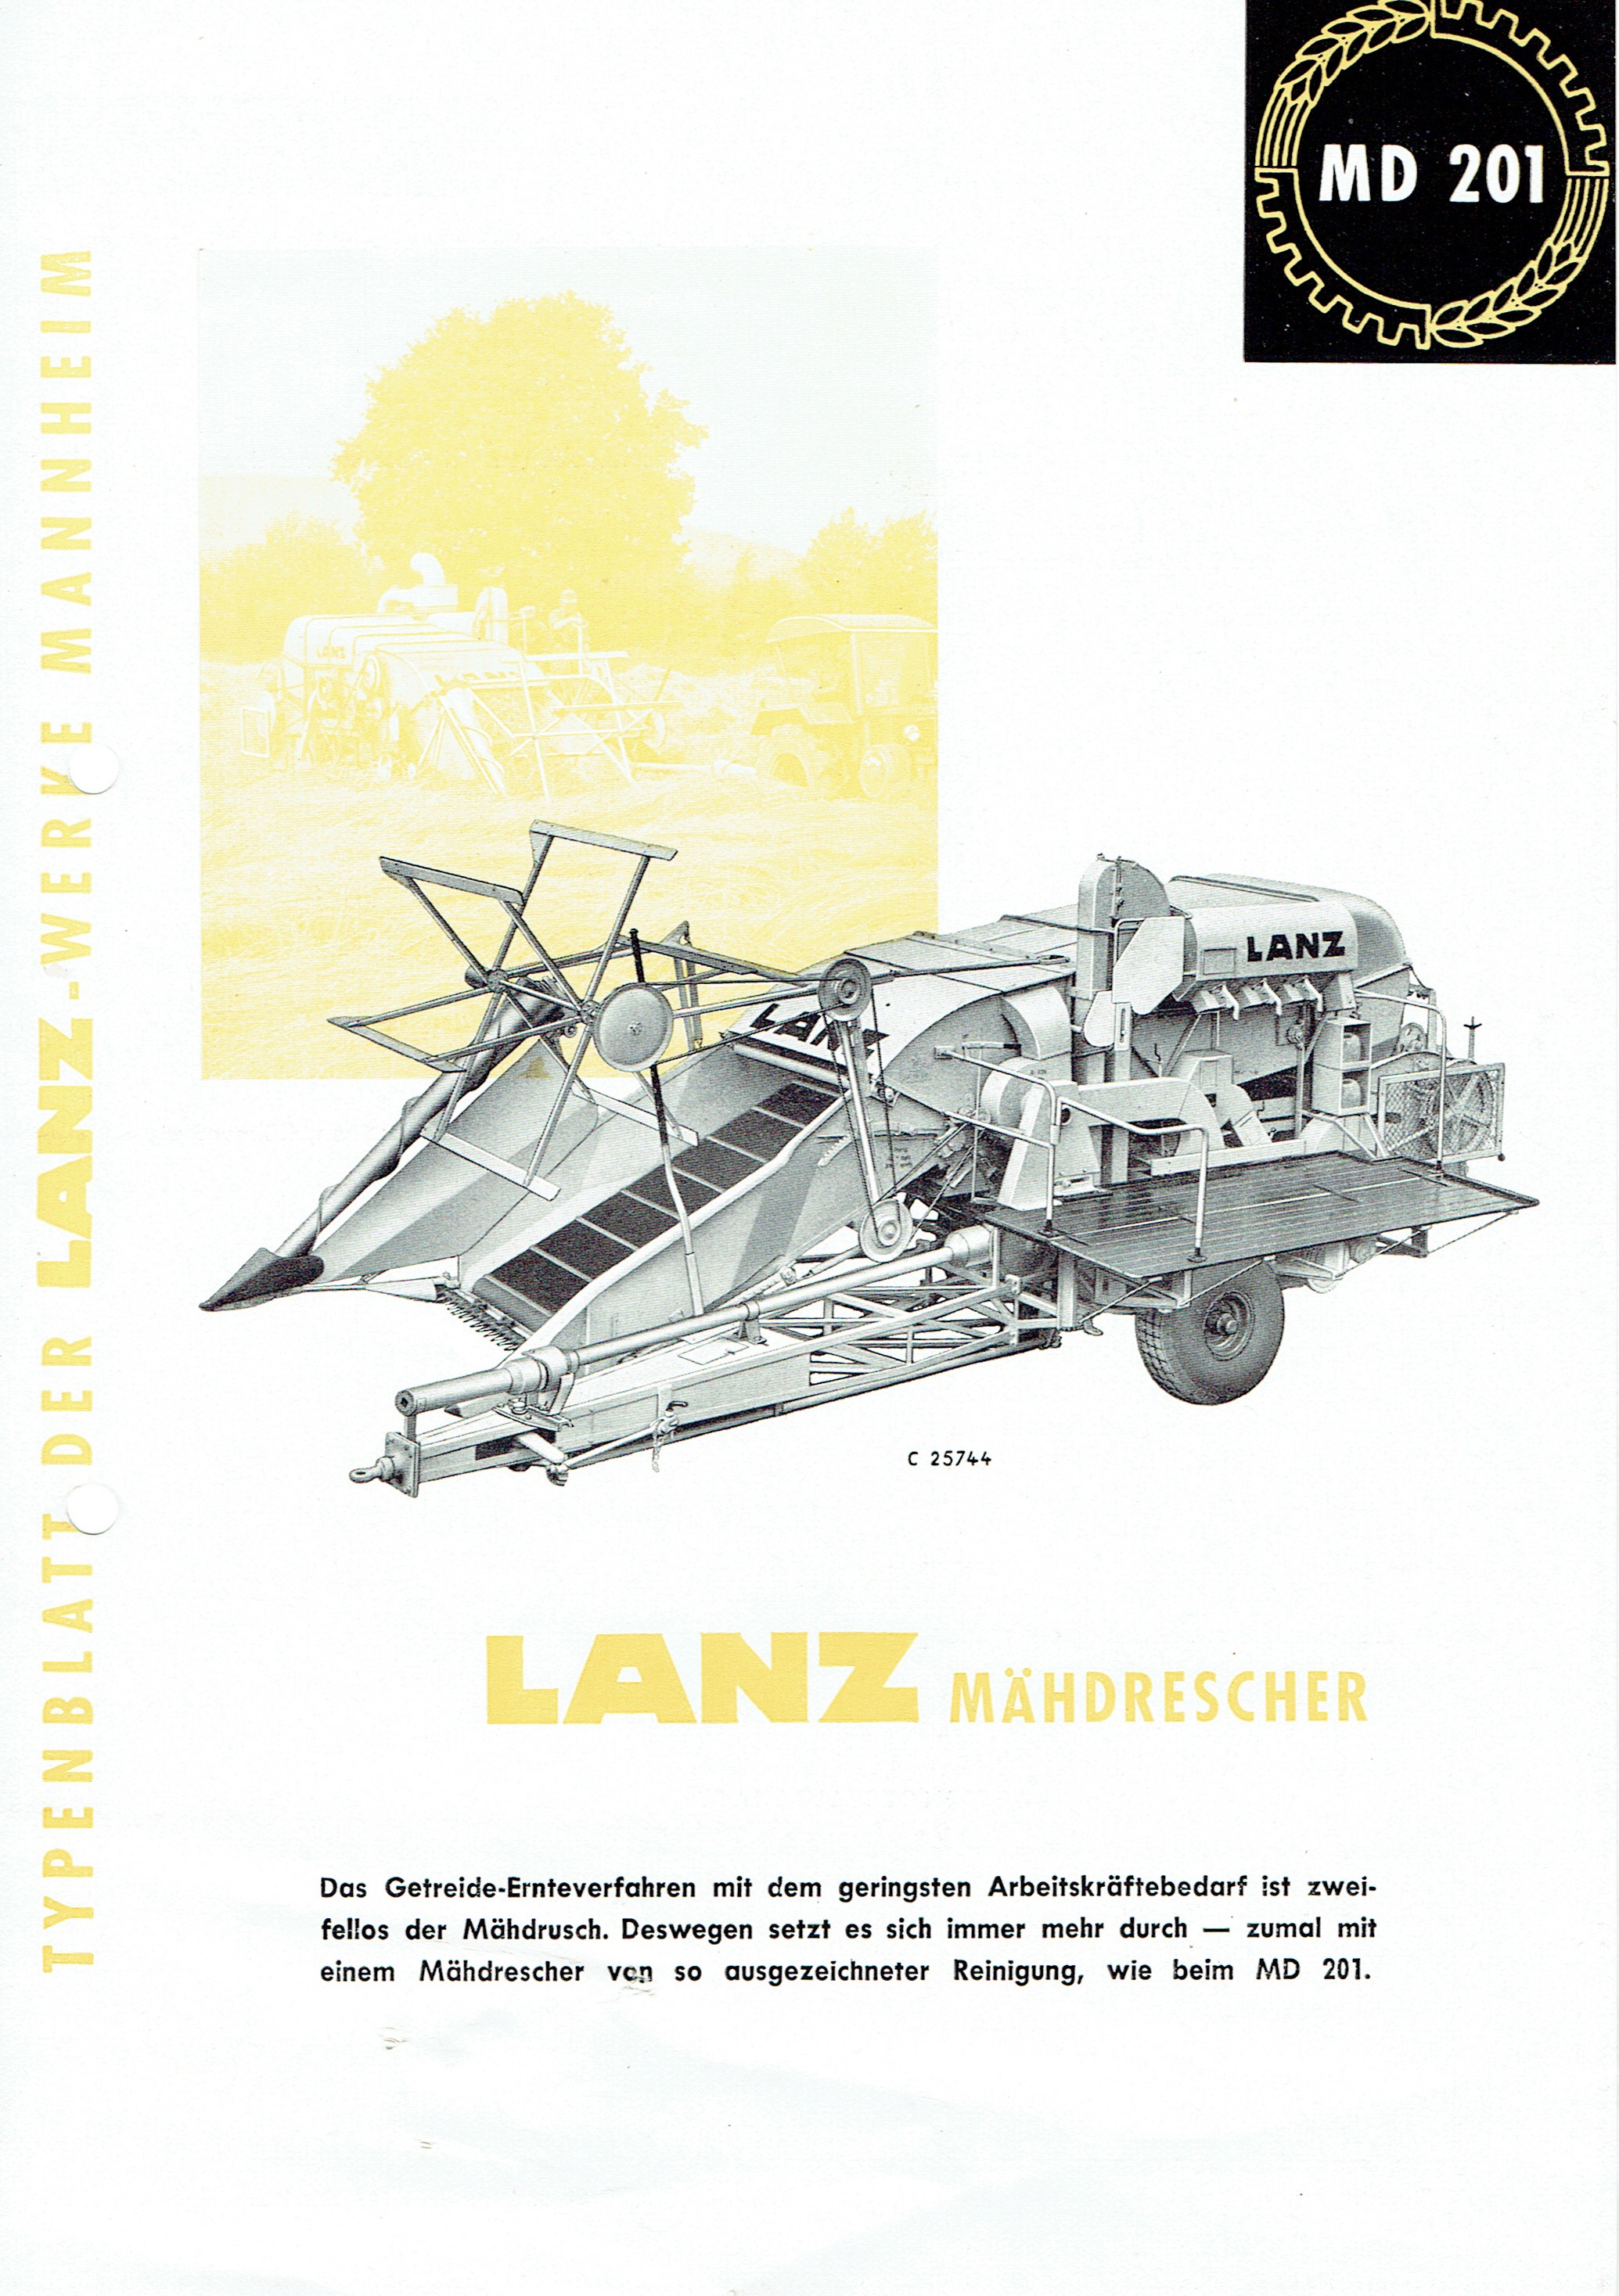 LANZ MD201 (Mähdrescherarchiv Kühnstetter CC BY-NC-SA)